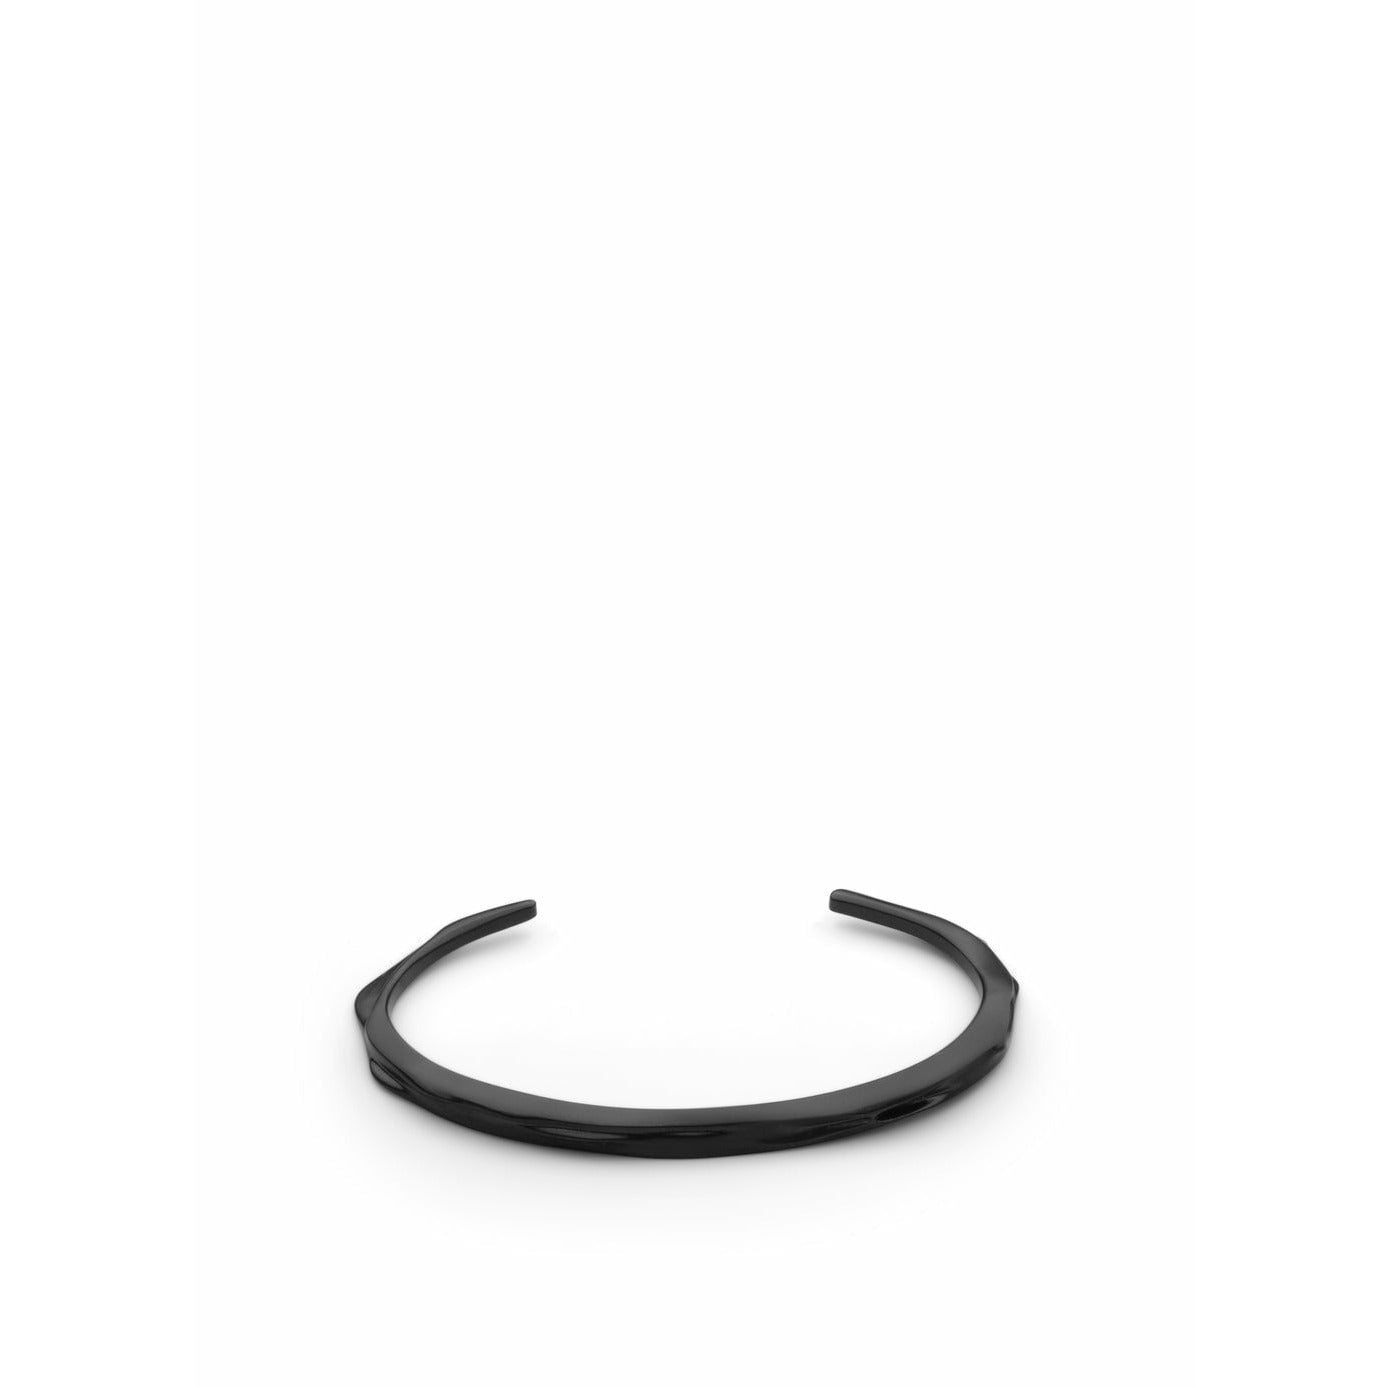 Skultuna Objets opaques Bracelet petit titane noir, Ø14,5 cm